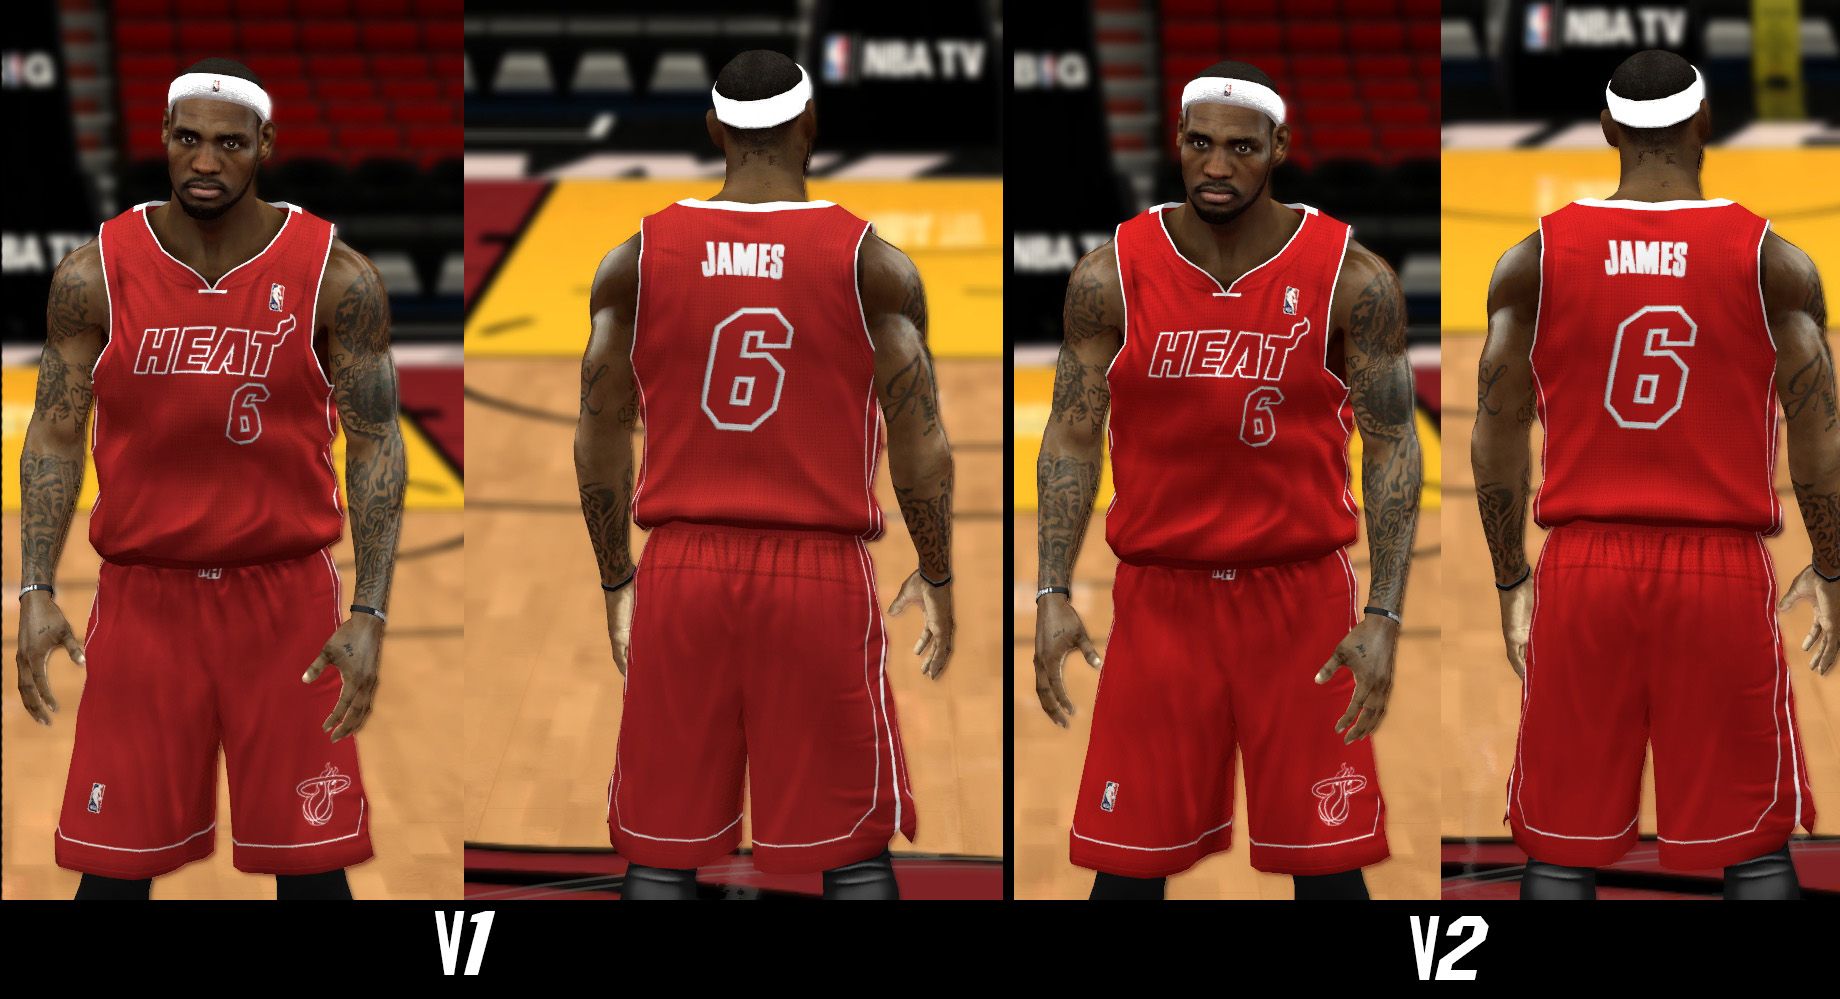 OC2k - RELEASED: Miami Heat VICE uniforms pack by OC2K mod